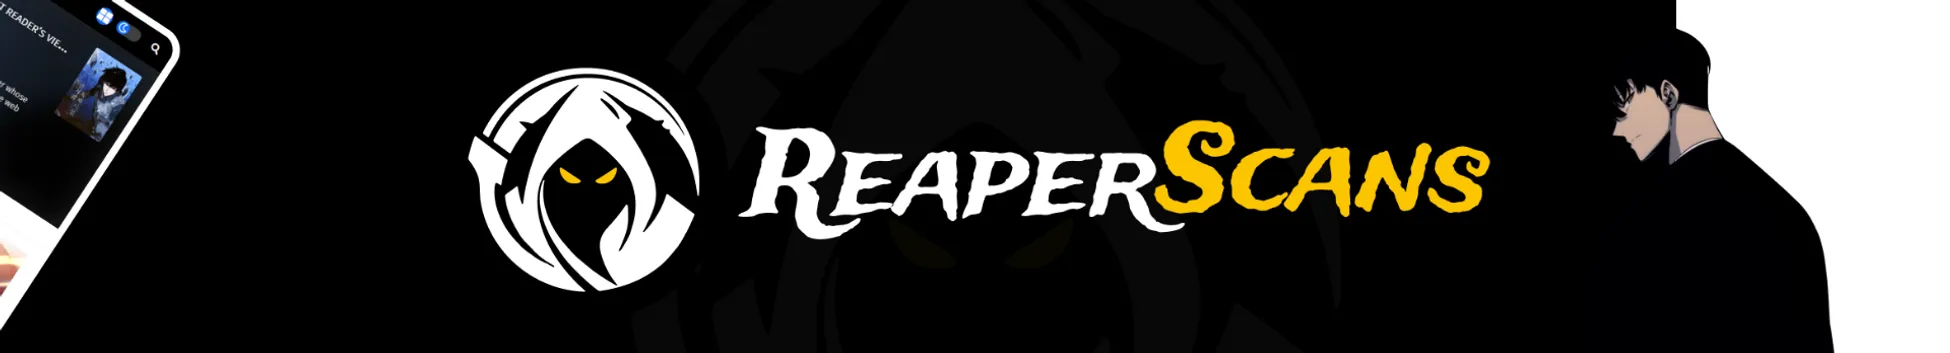 Reaper Scans